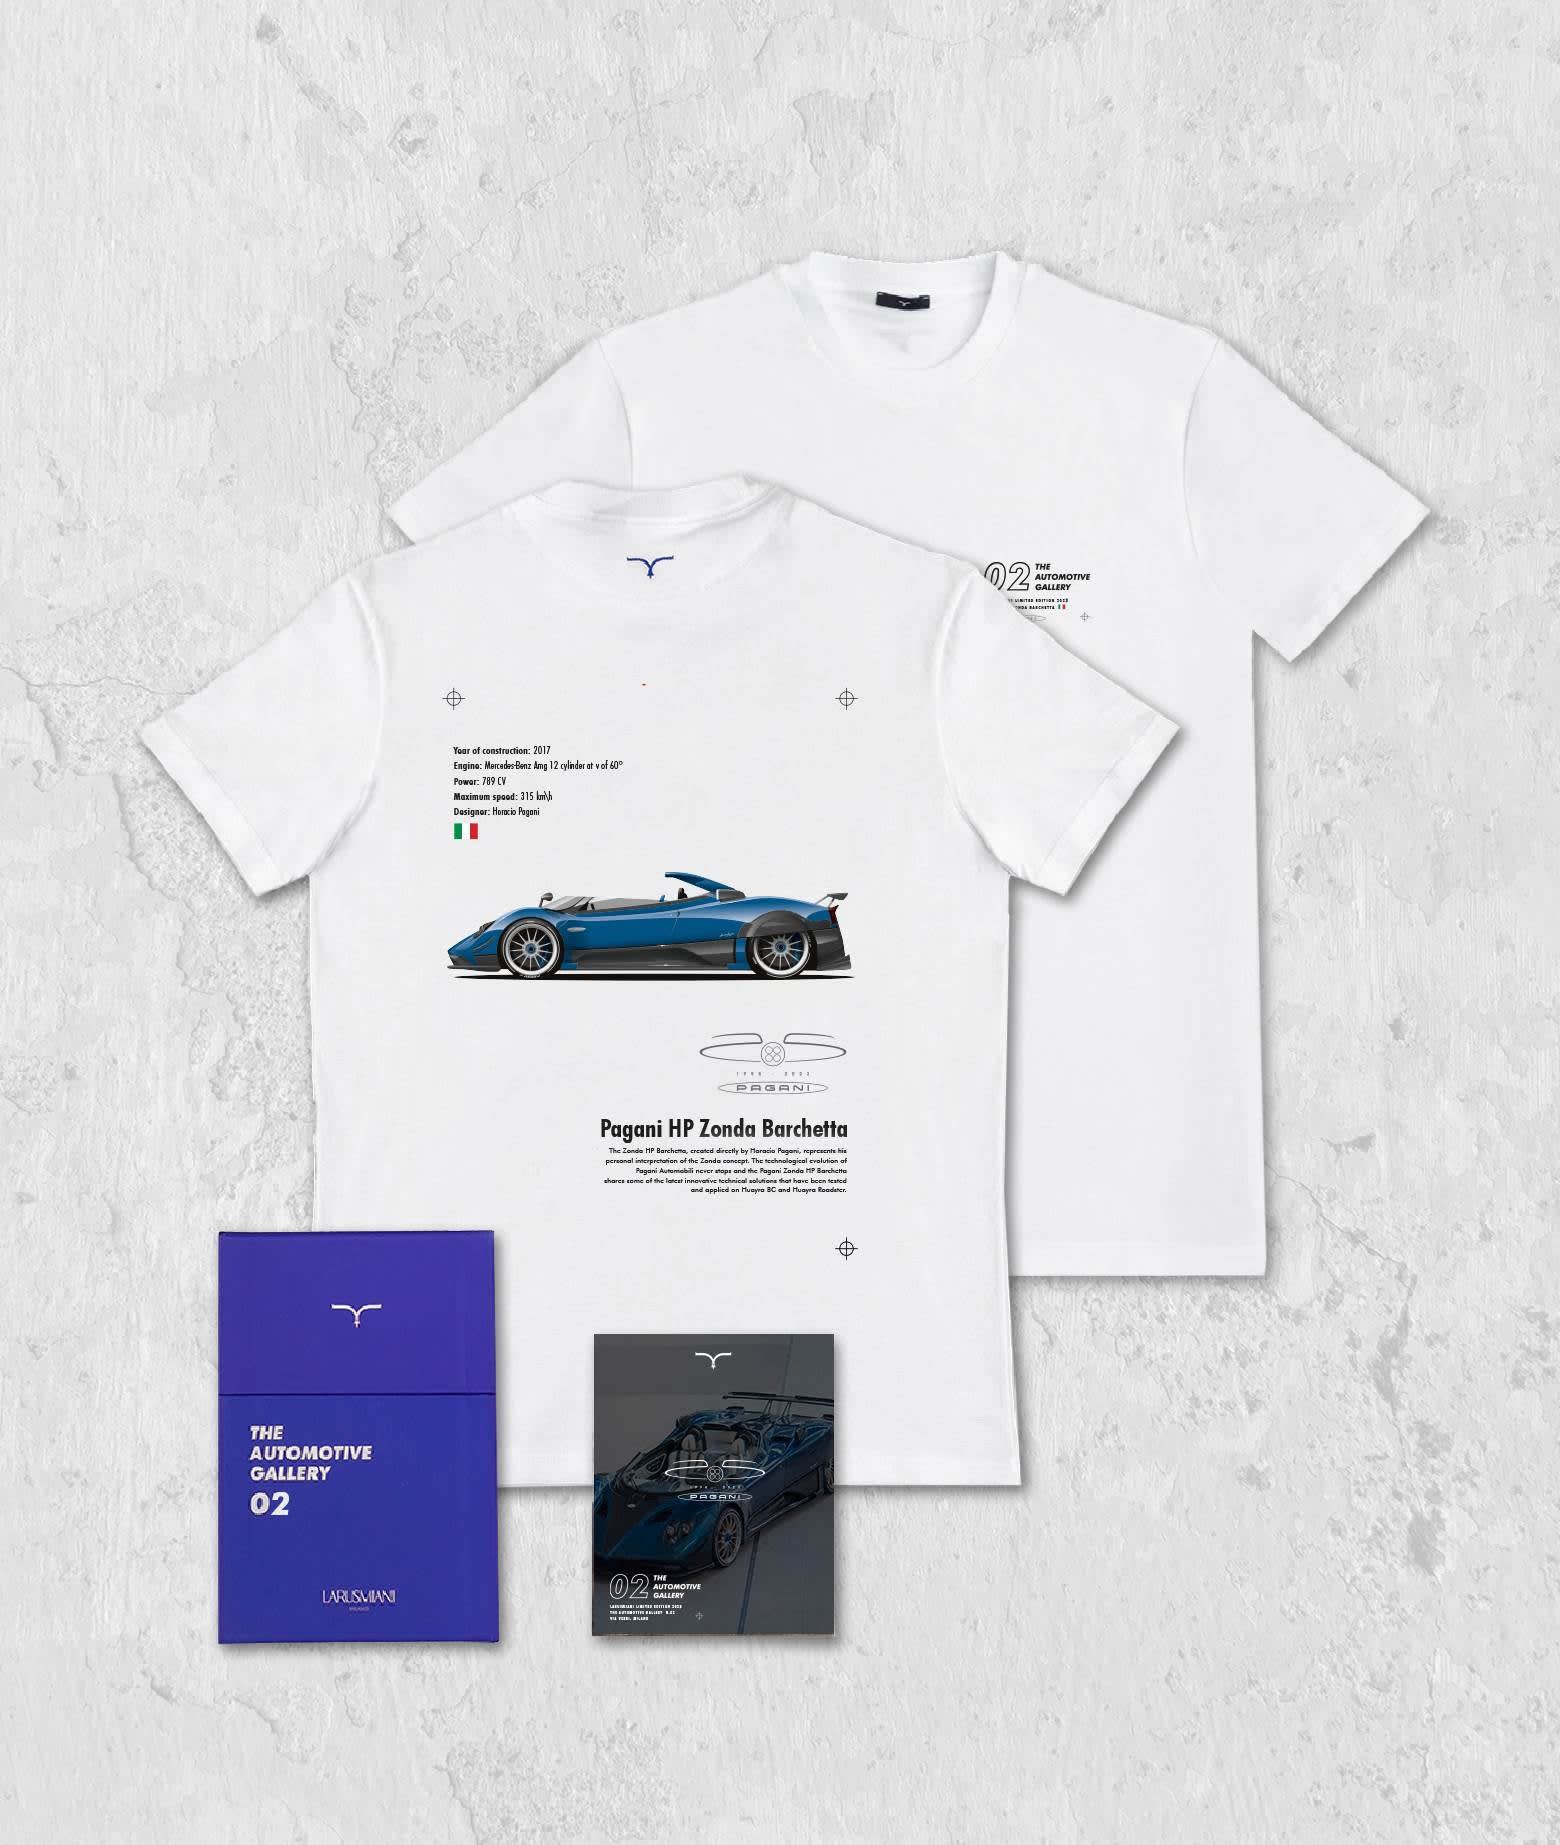 Larusmiani The Automotive Gallery - 02. Pagani Hp Barchetta T-shirt In White